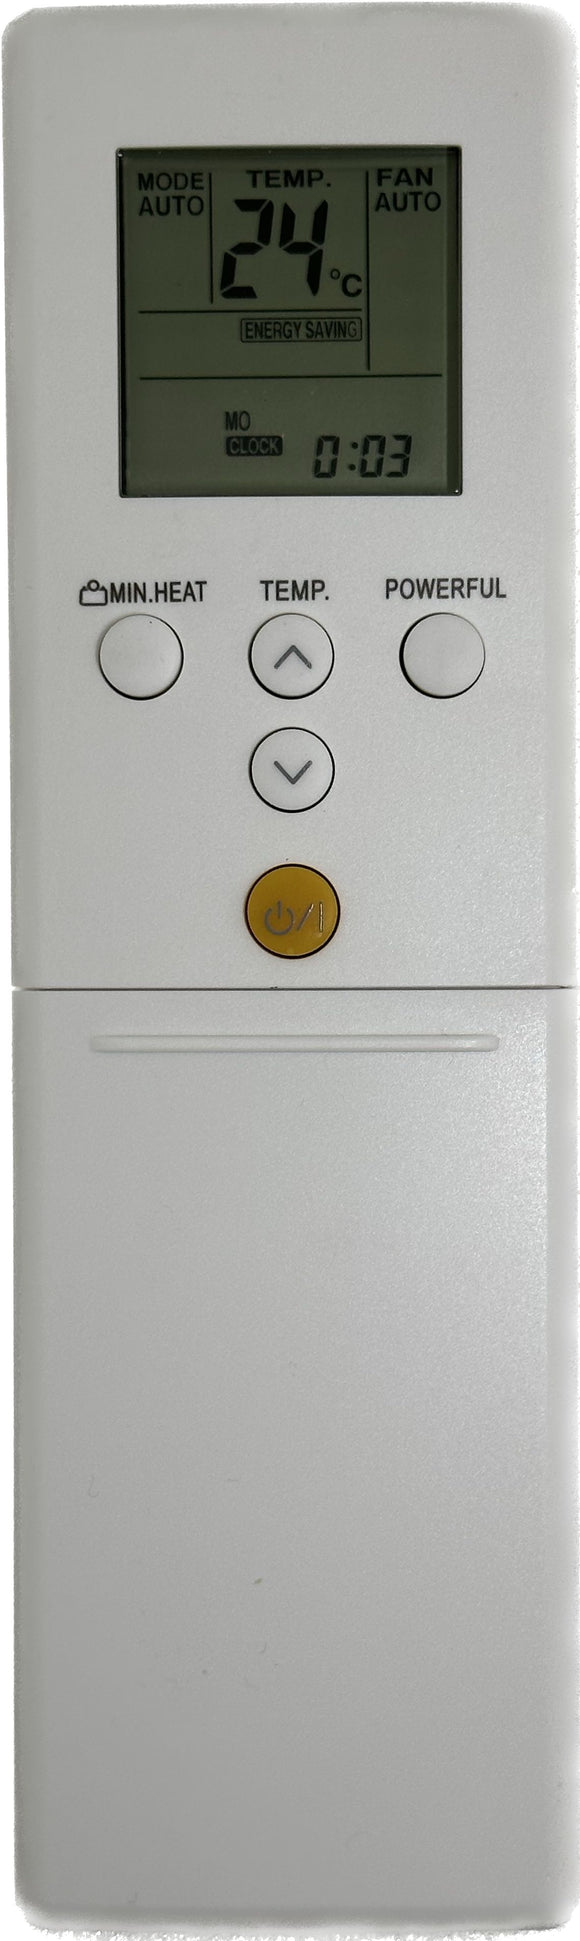 Fujitsu AOTG09KMTC, AOTG12KMTC Air Conditioner Replacement Remote Control